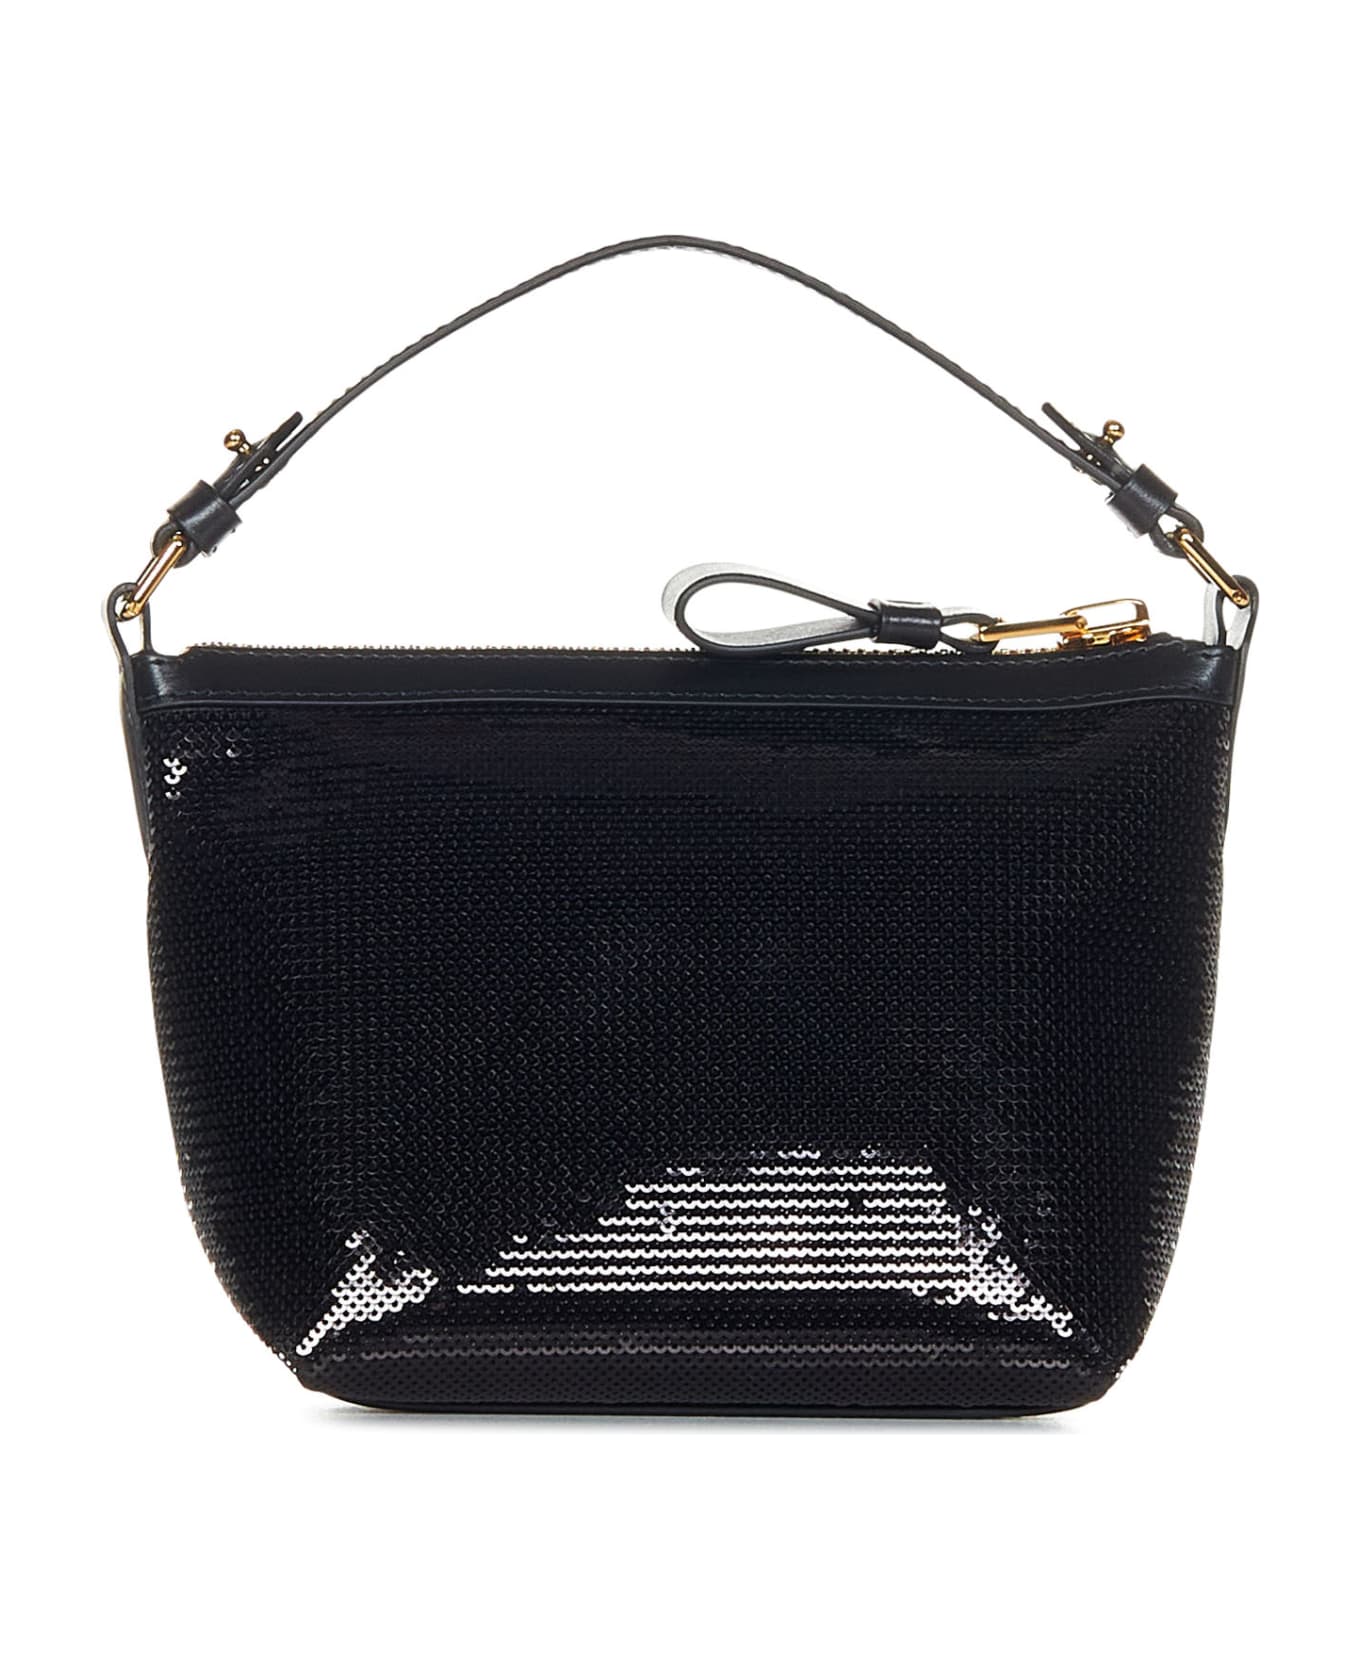 Tom Ford Label Small Handbag - Black